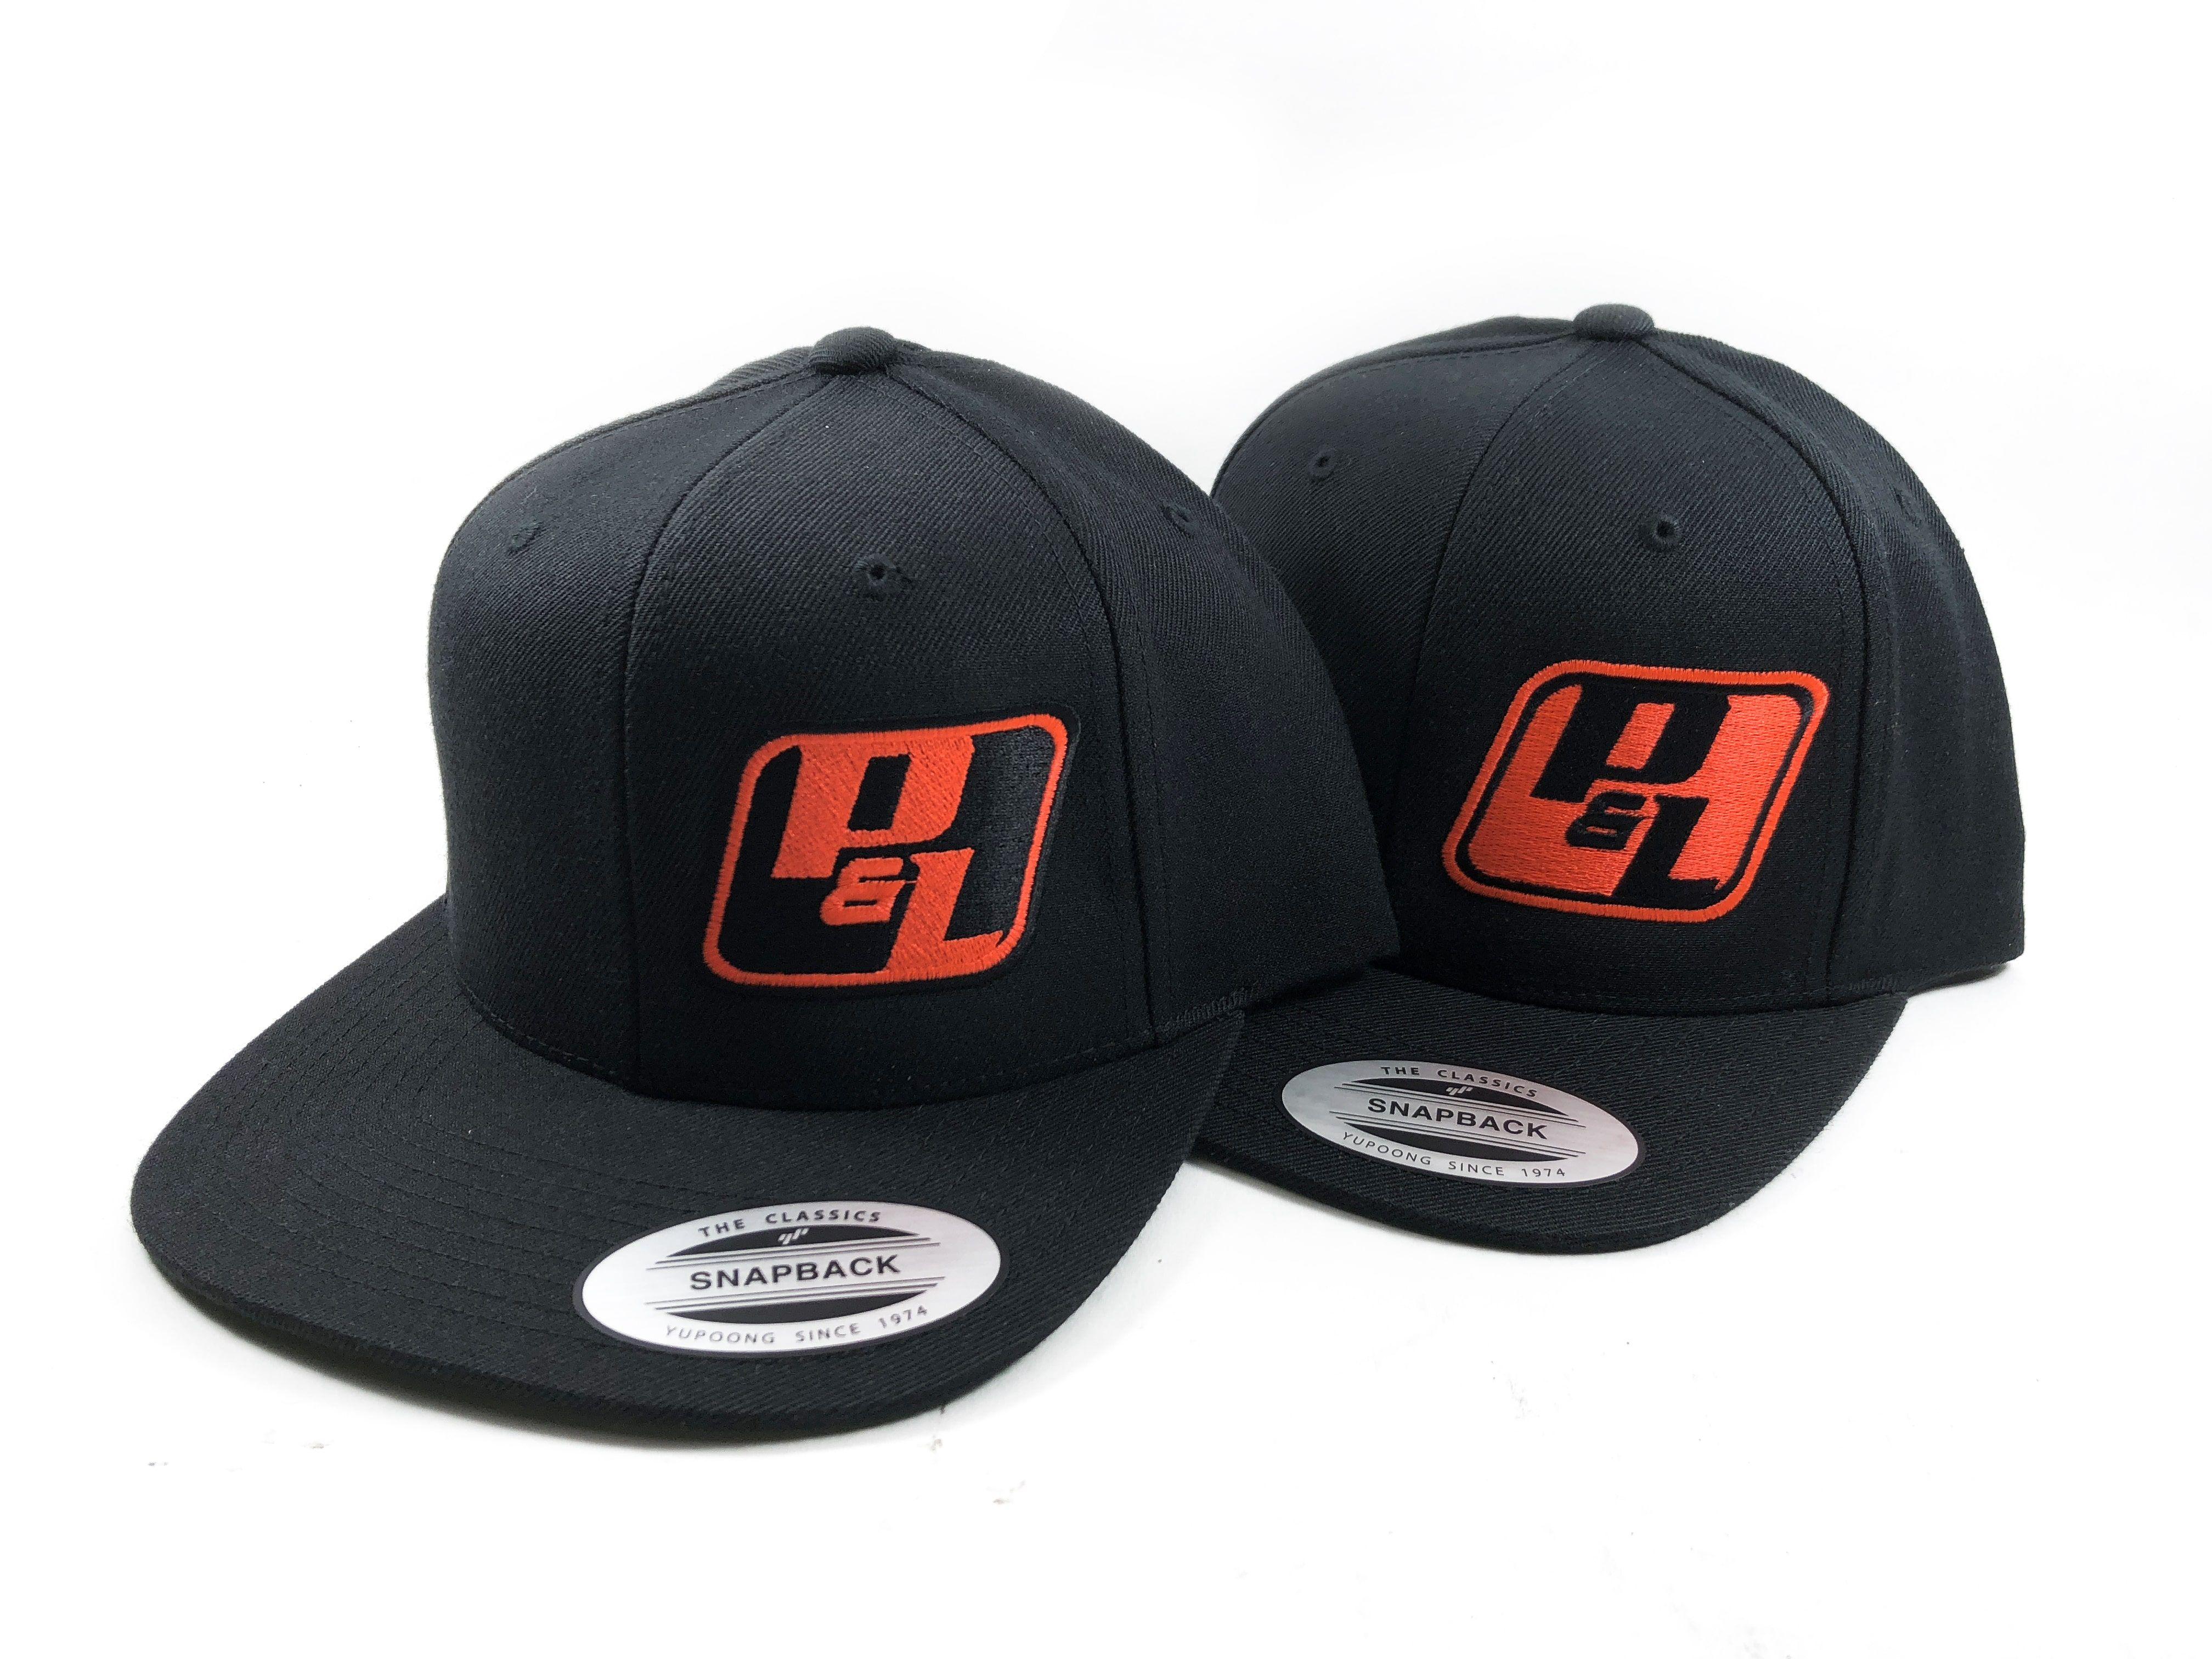 P&L Logo - P&L Motorsports Official Hat - Large Logo